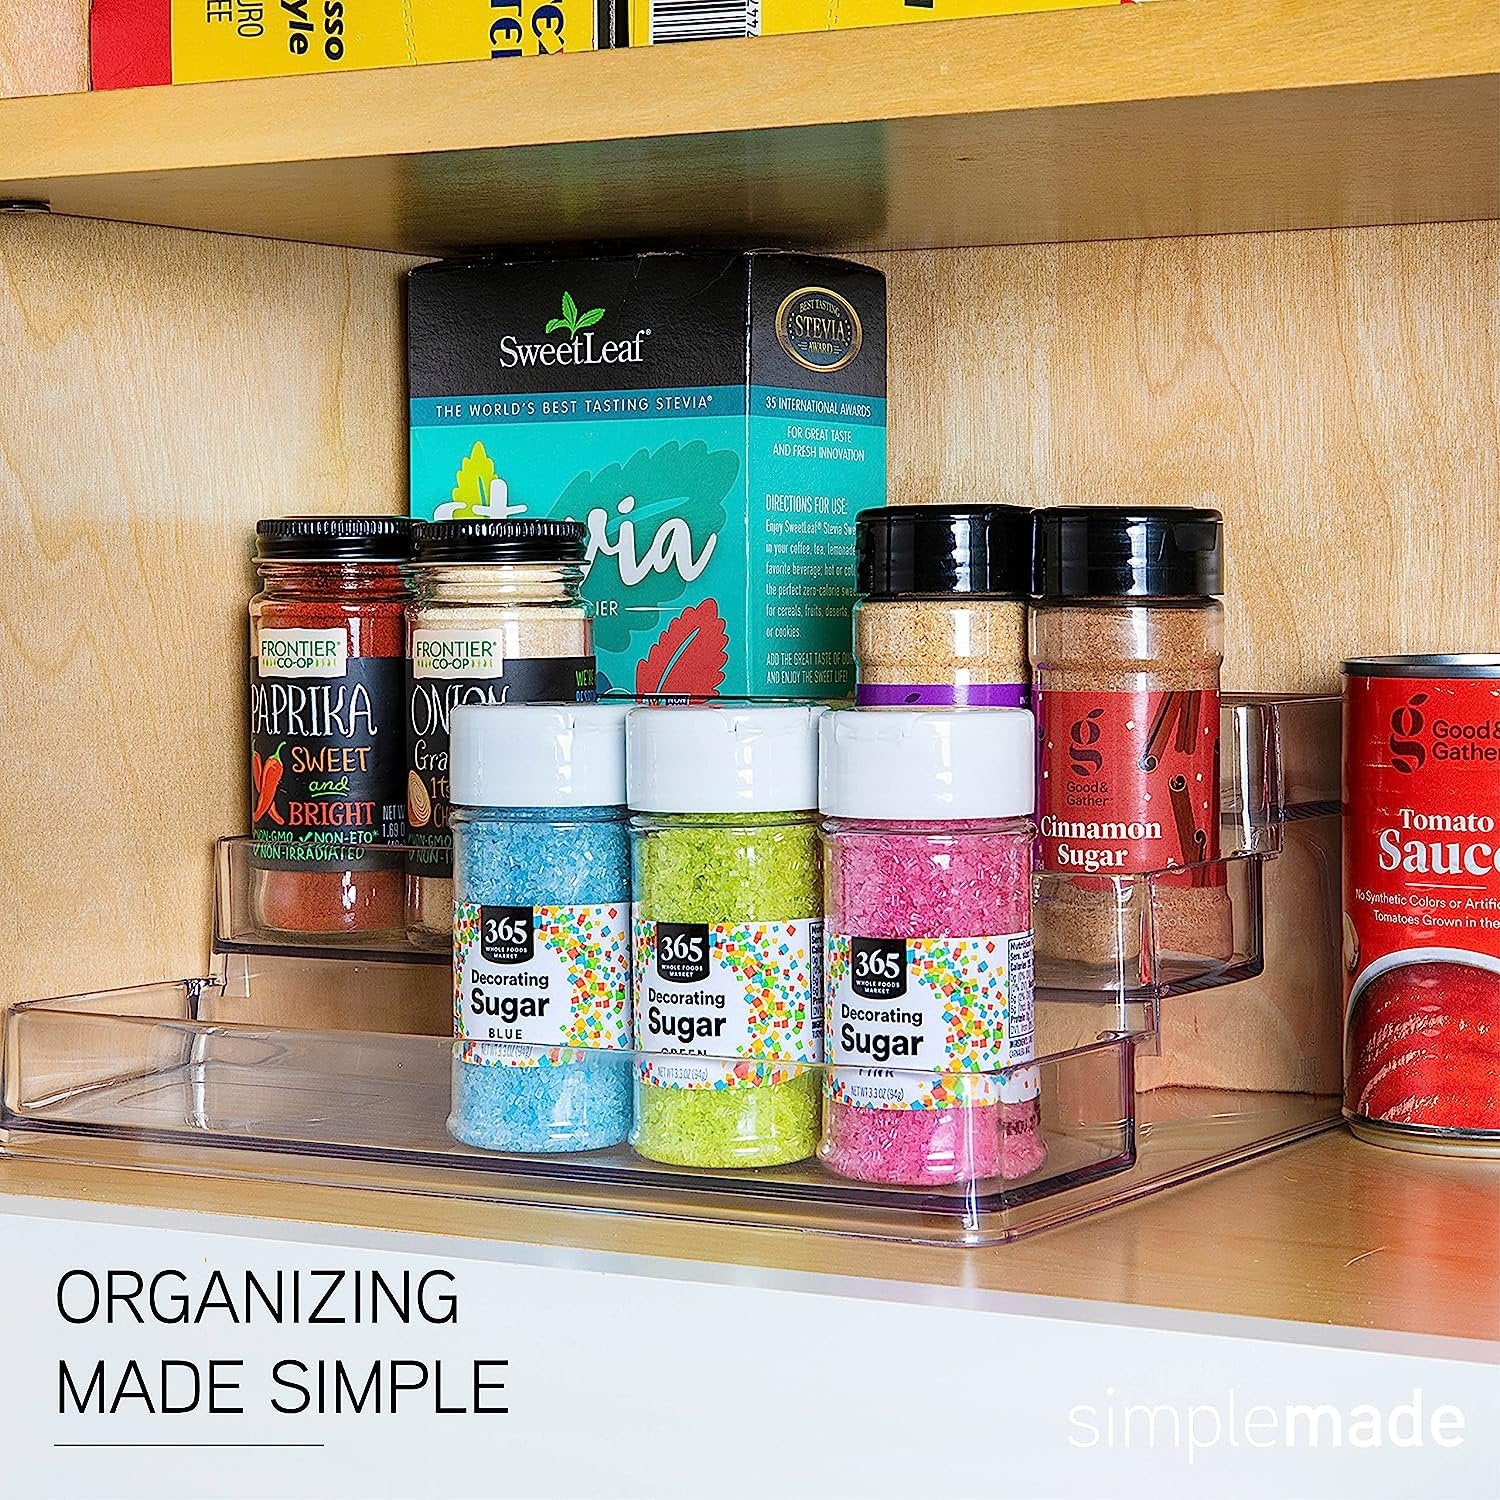  iDesign Linus Plastic Stadium Spice Racks, BPA-Free 3-Tiered  Organizer for Kitchen, Pantry, Bathroom, Vanity, Office, Craft Room Storage  Organization, 10.25 x 9.25 x 4, Clear : Home & Kitchen